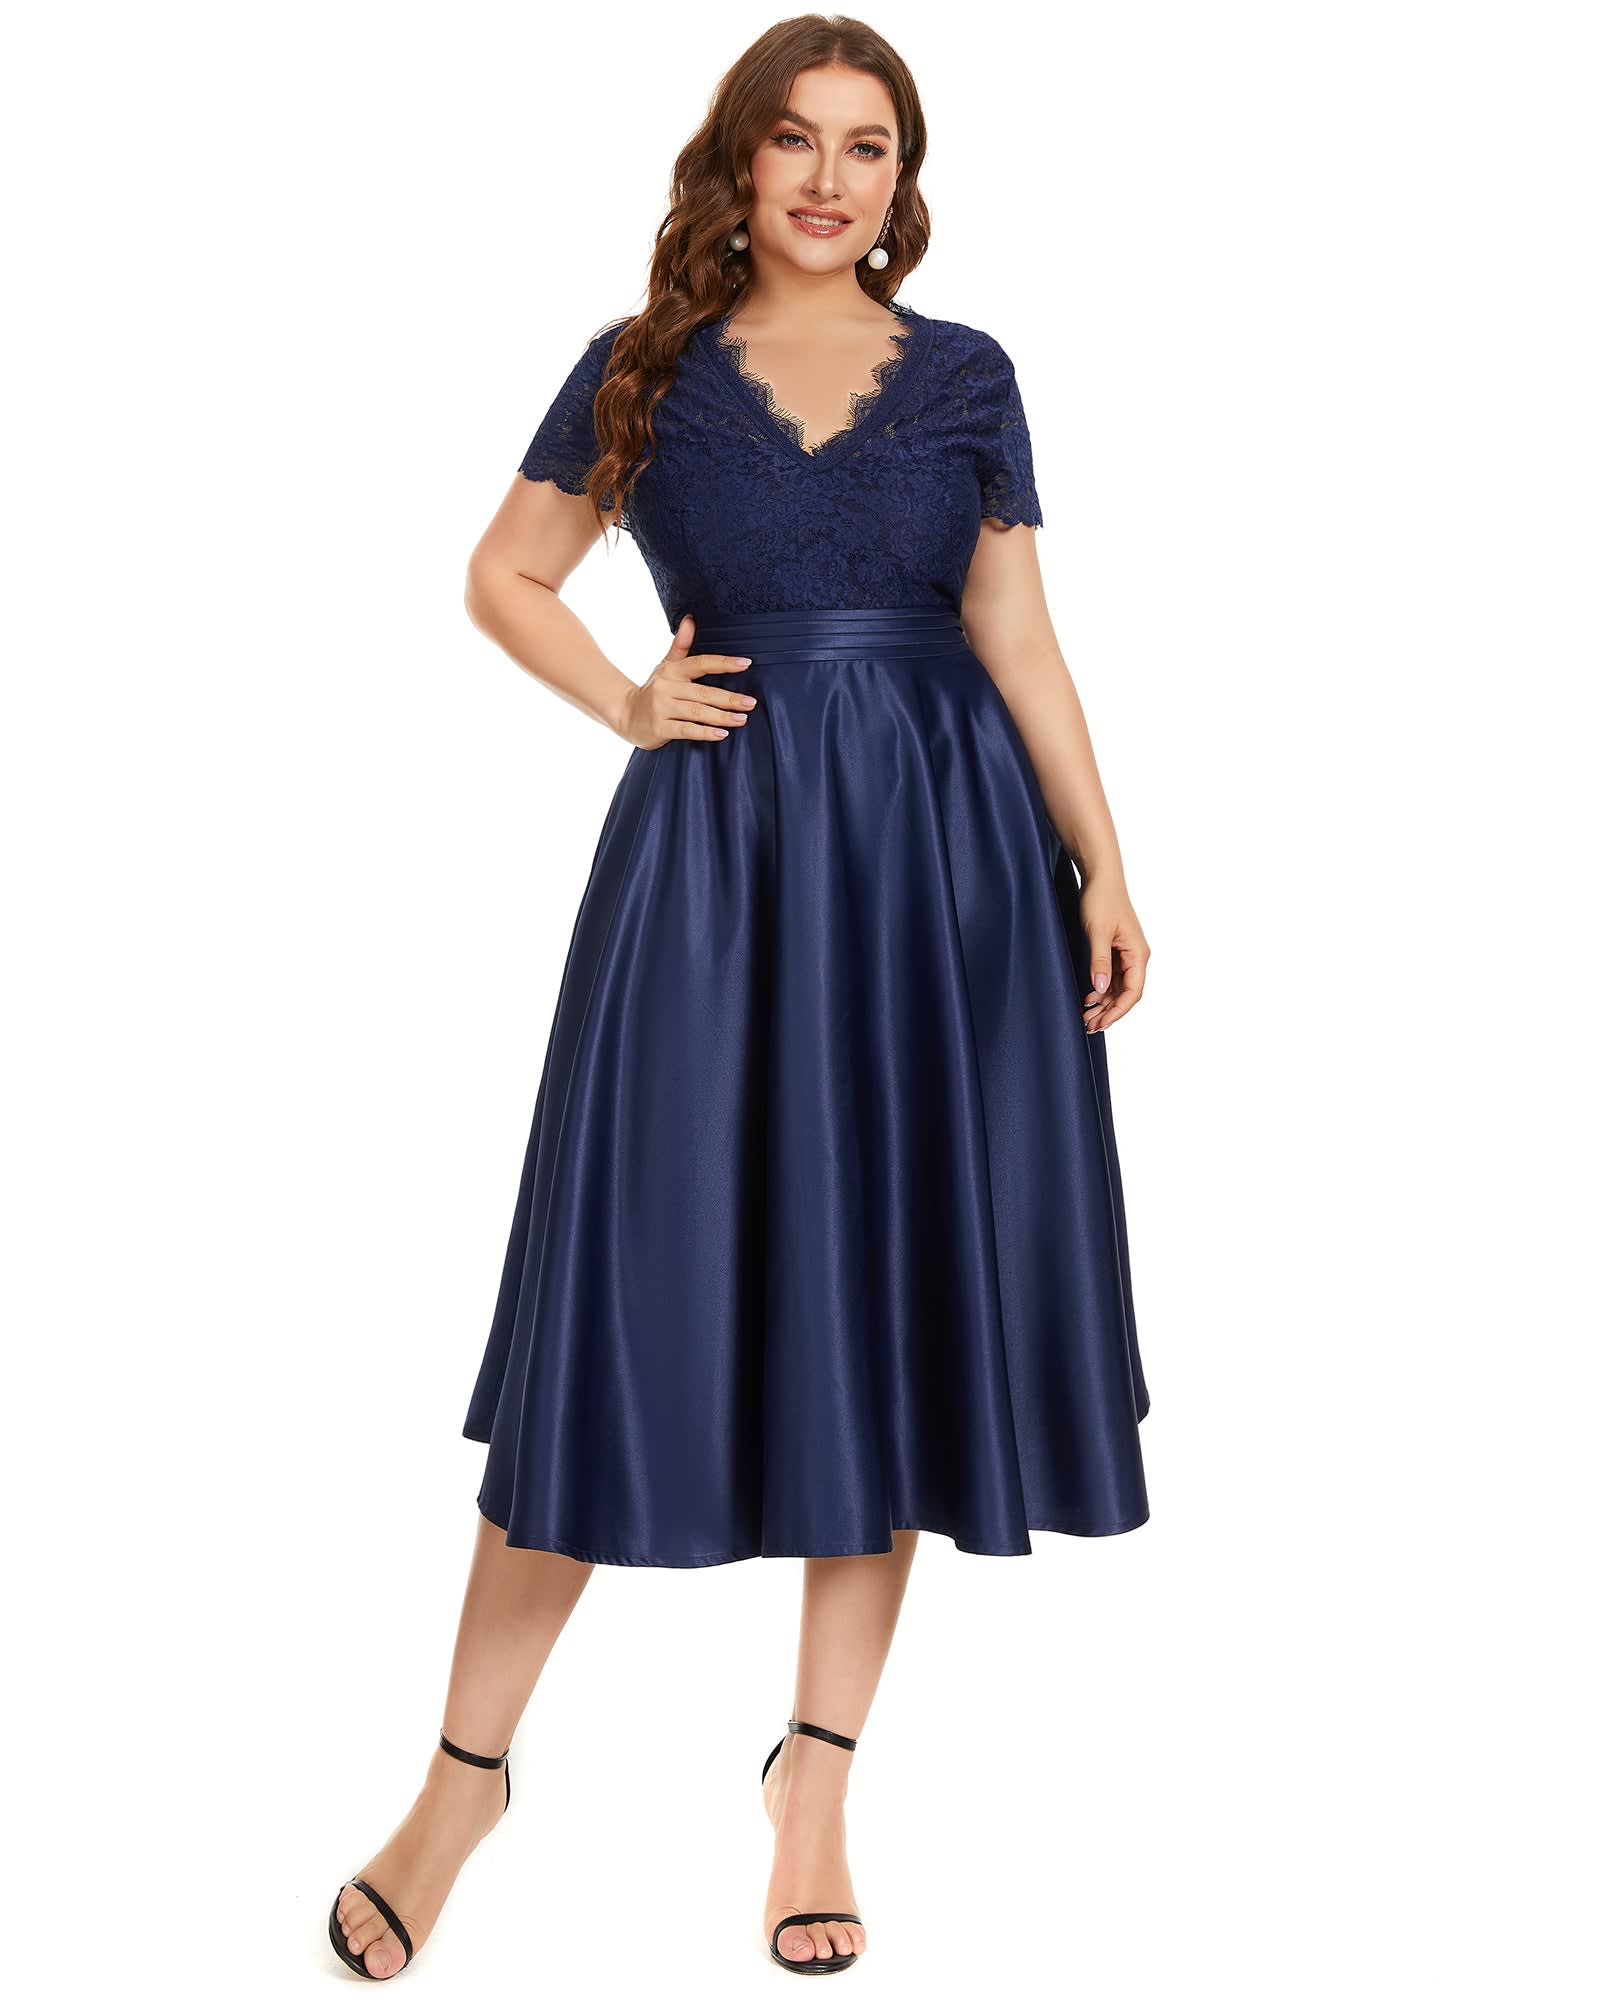 navy blue cocktail dress